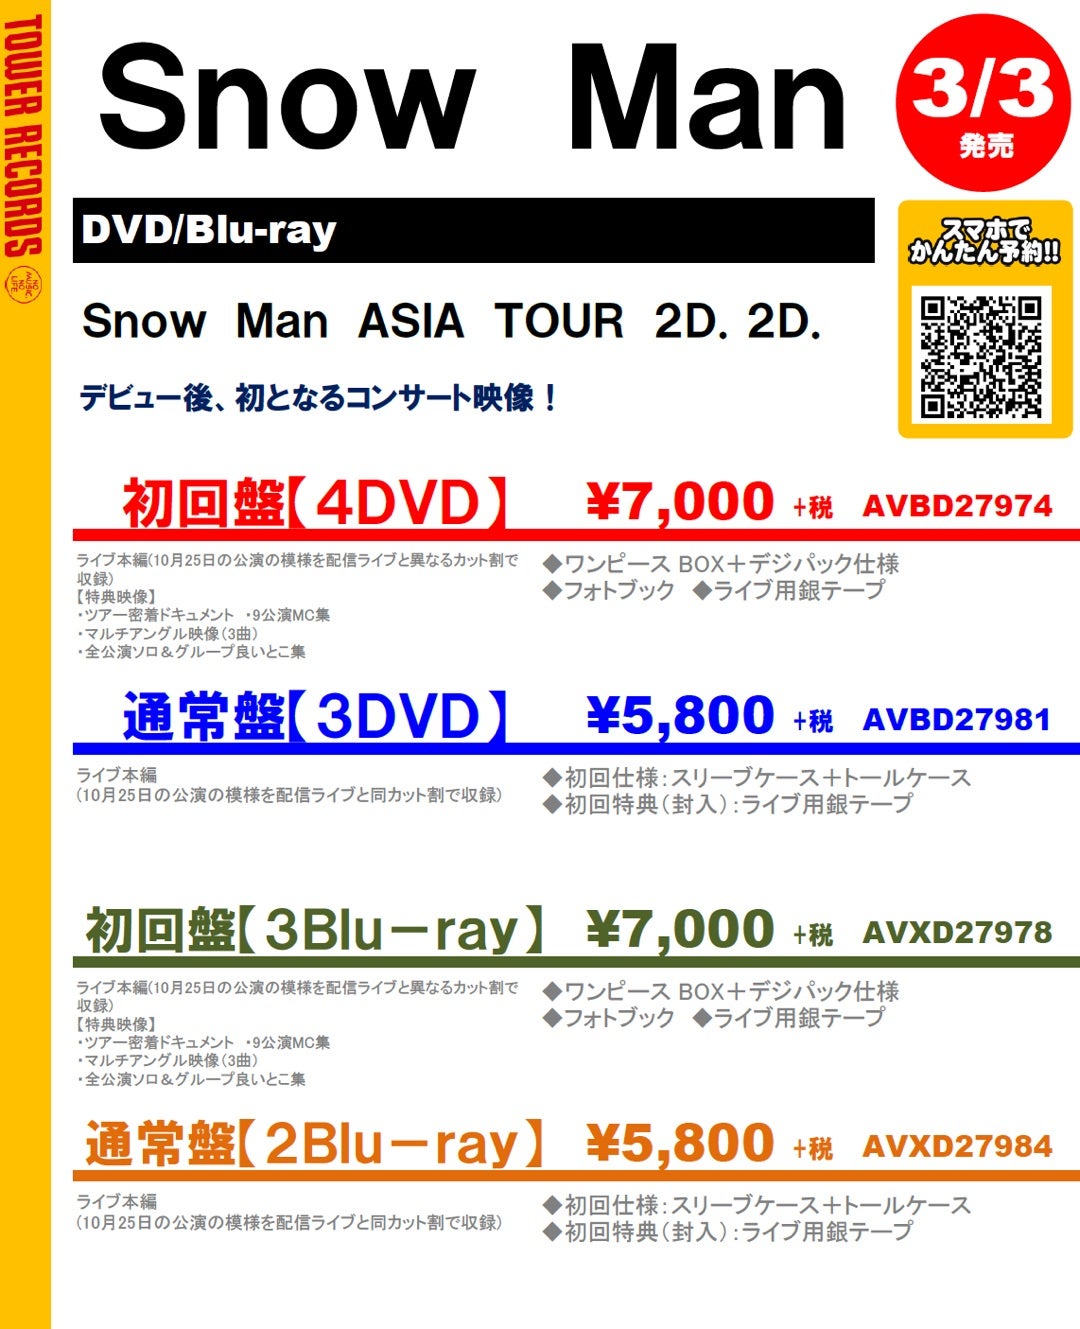 Snow Man ASIA TOUR 2D.2D. Blu-ray 初回盤通常盤 tritonwp.com